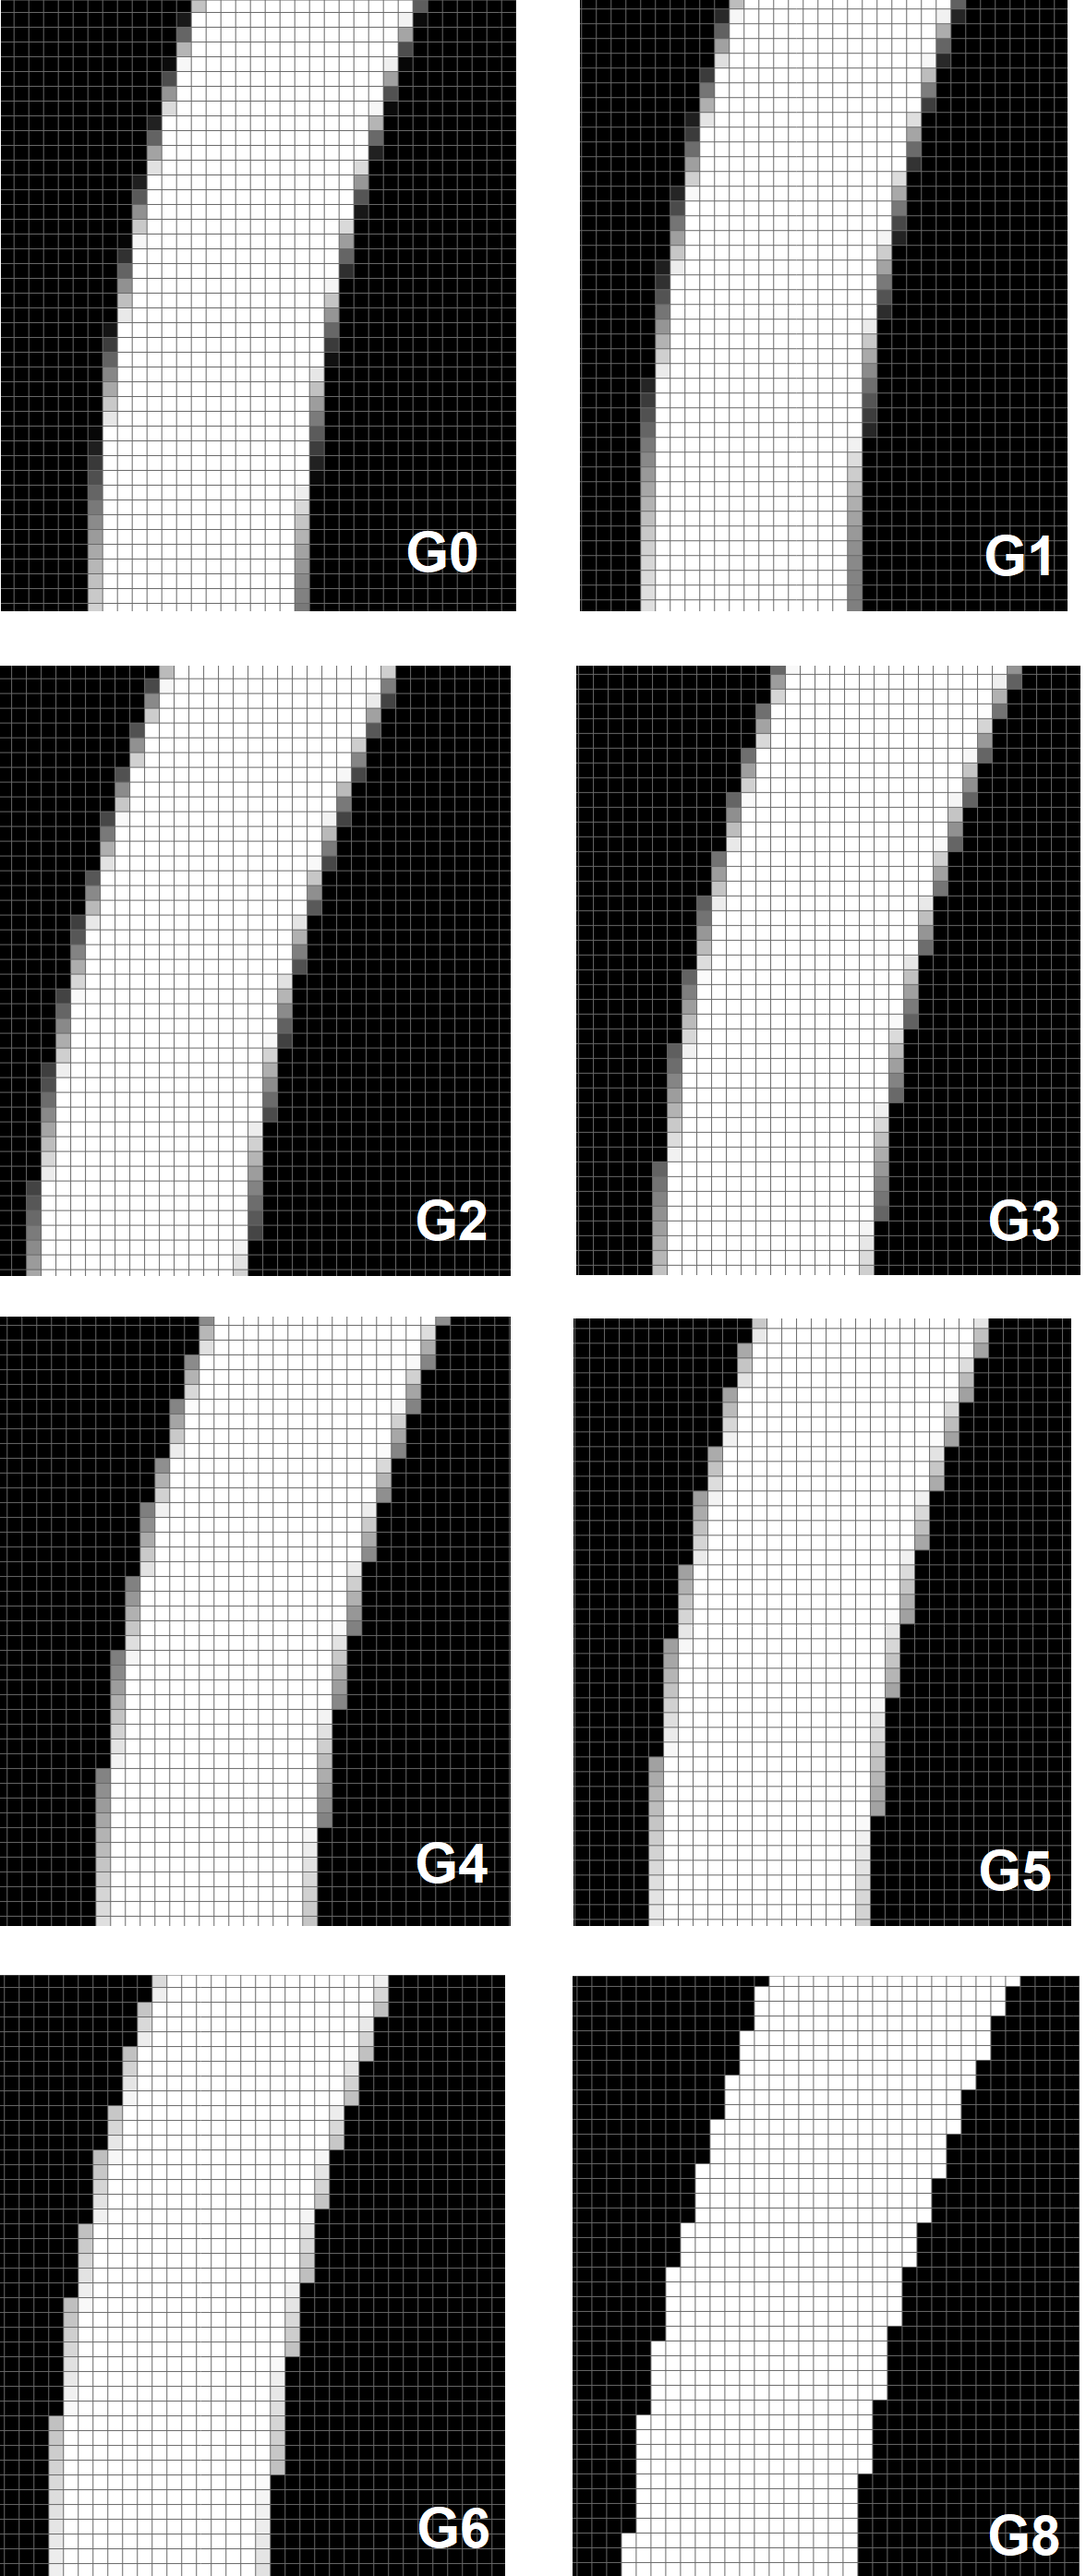 Grey and blur grayscale pixels resin 3D-printing Elegoo Mars Saturn Anti-Aliasing Anti Aliasing AntiAliasing AA